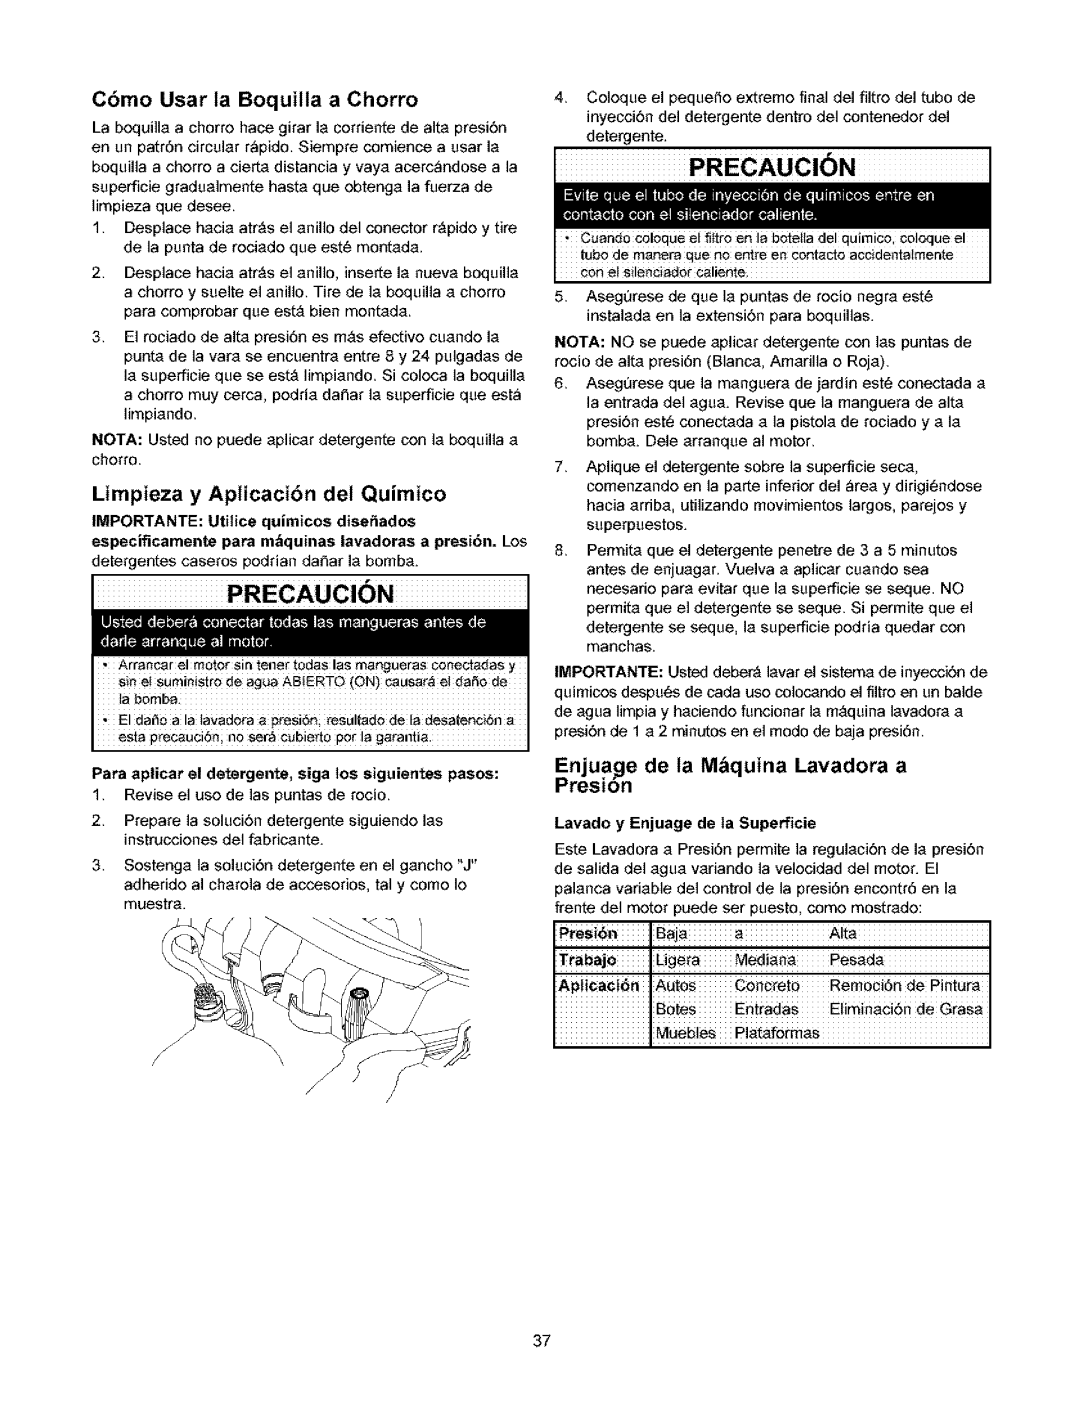 Craftsman 580.753 manual Precaucion, Cbmo Usar ta Boquilla a Chorro, Limpieza y Apticaci6n del Quimico, Trabajo, Ap!ica¢i6n 